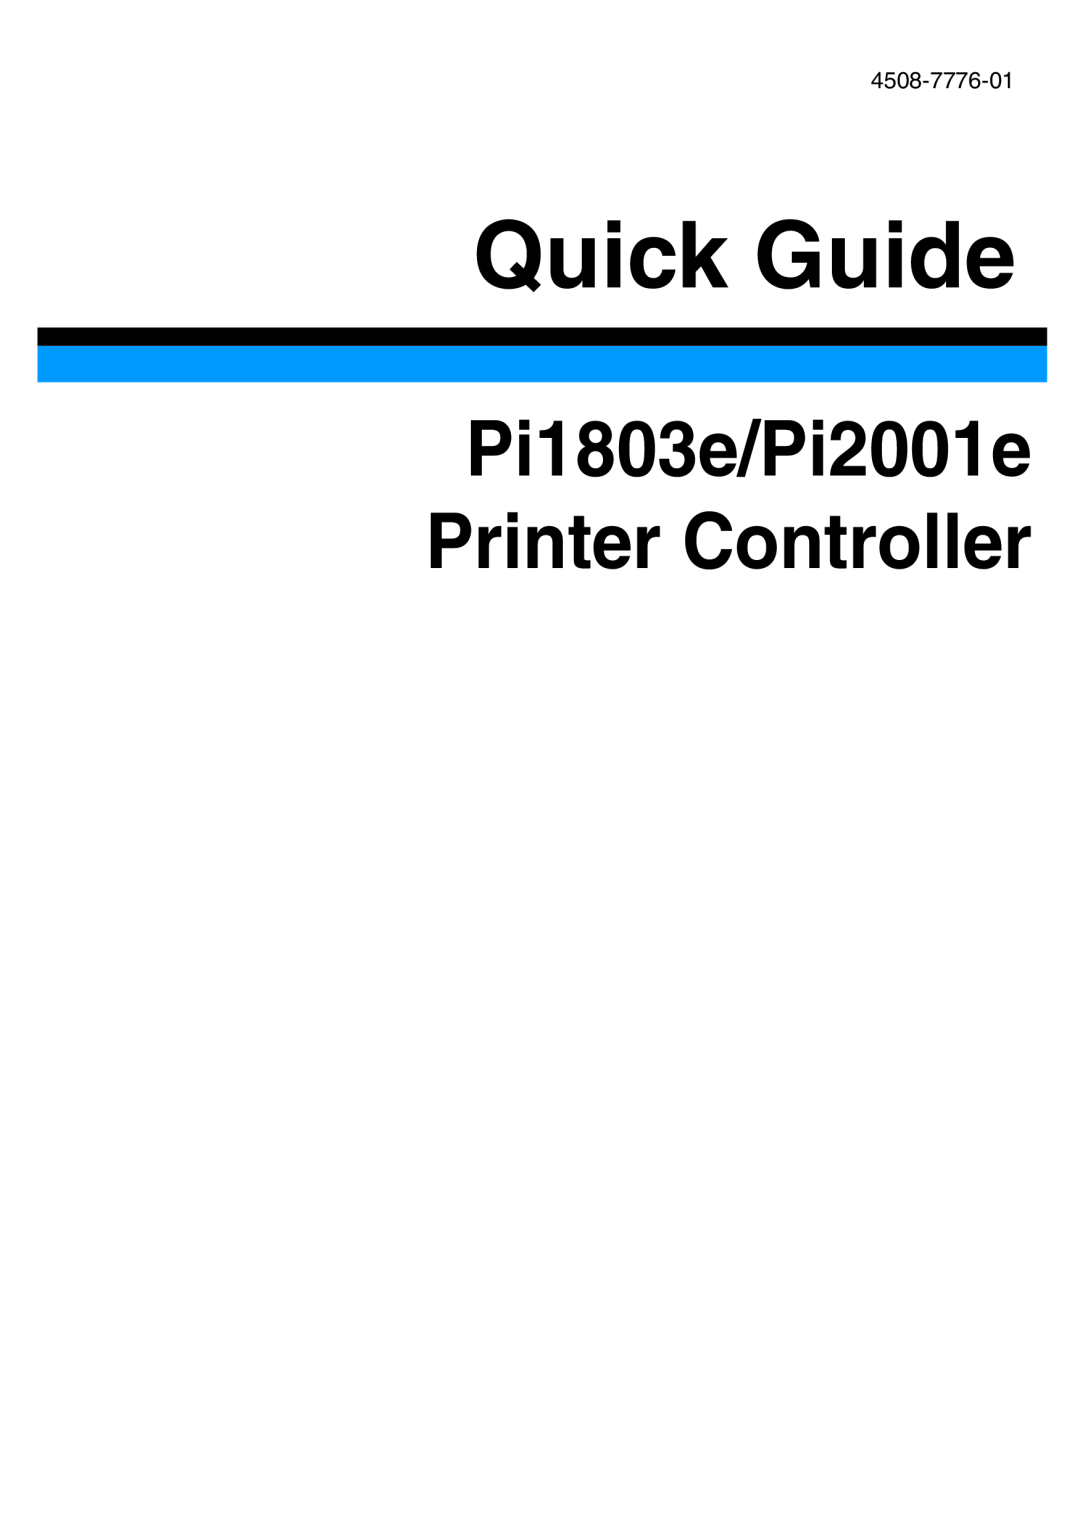 Konica Minolta manual Quick Guide, Pi1803e/Pi2001e Printer Controller 